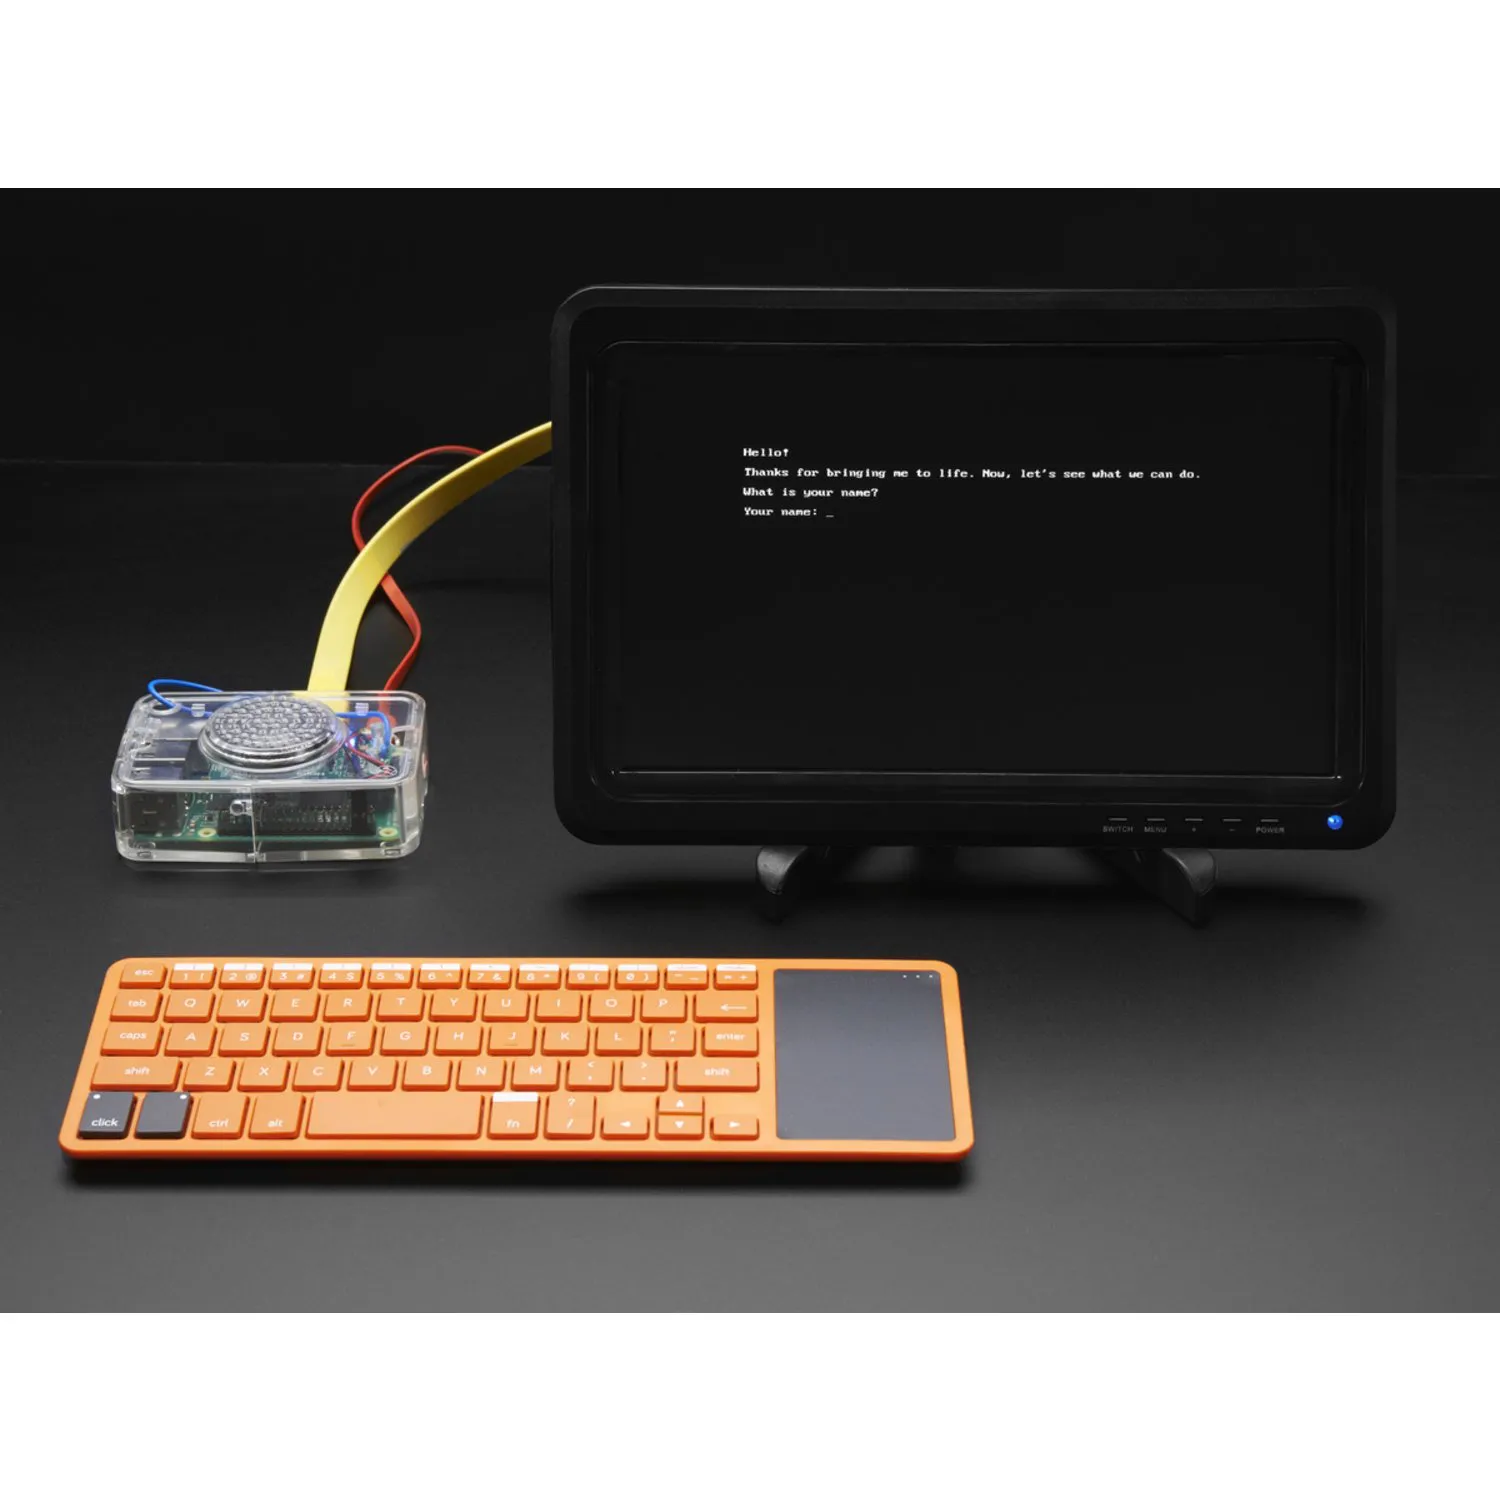 Photo of Kano Computer Kit with Raspberry Pi 3